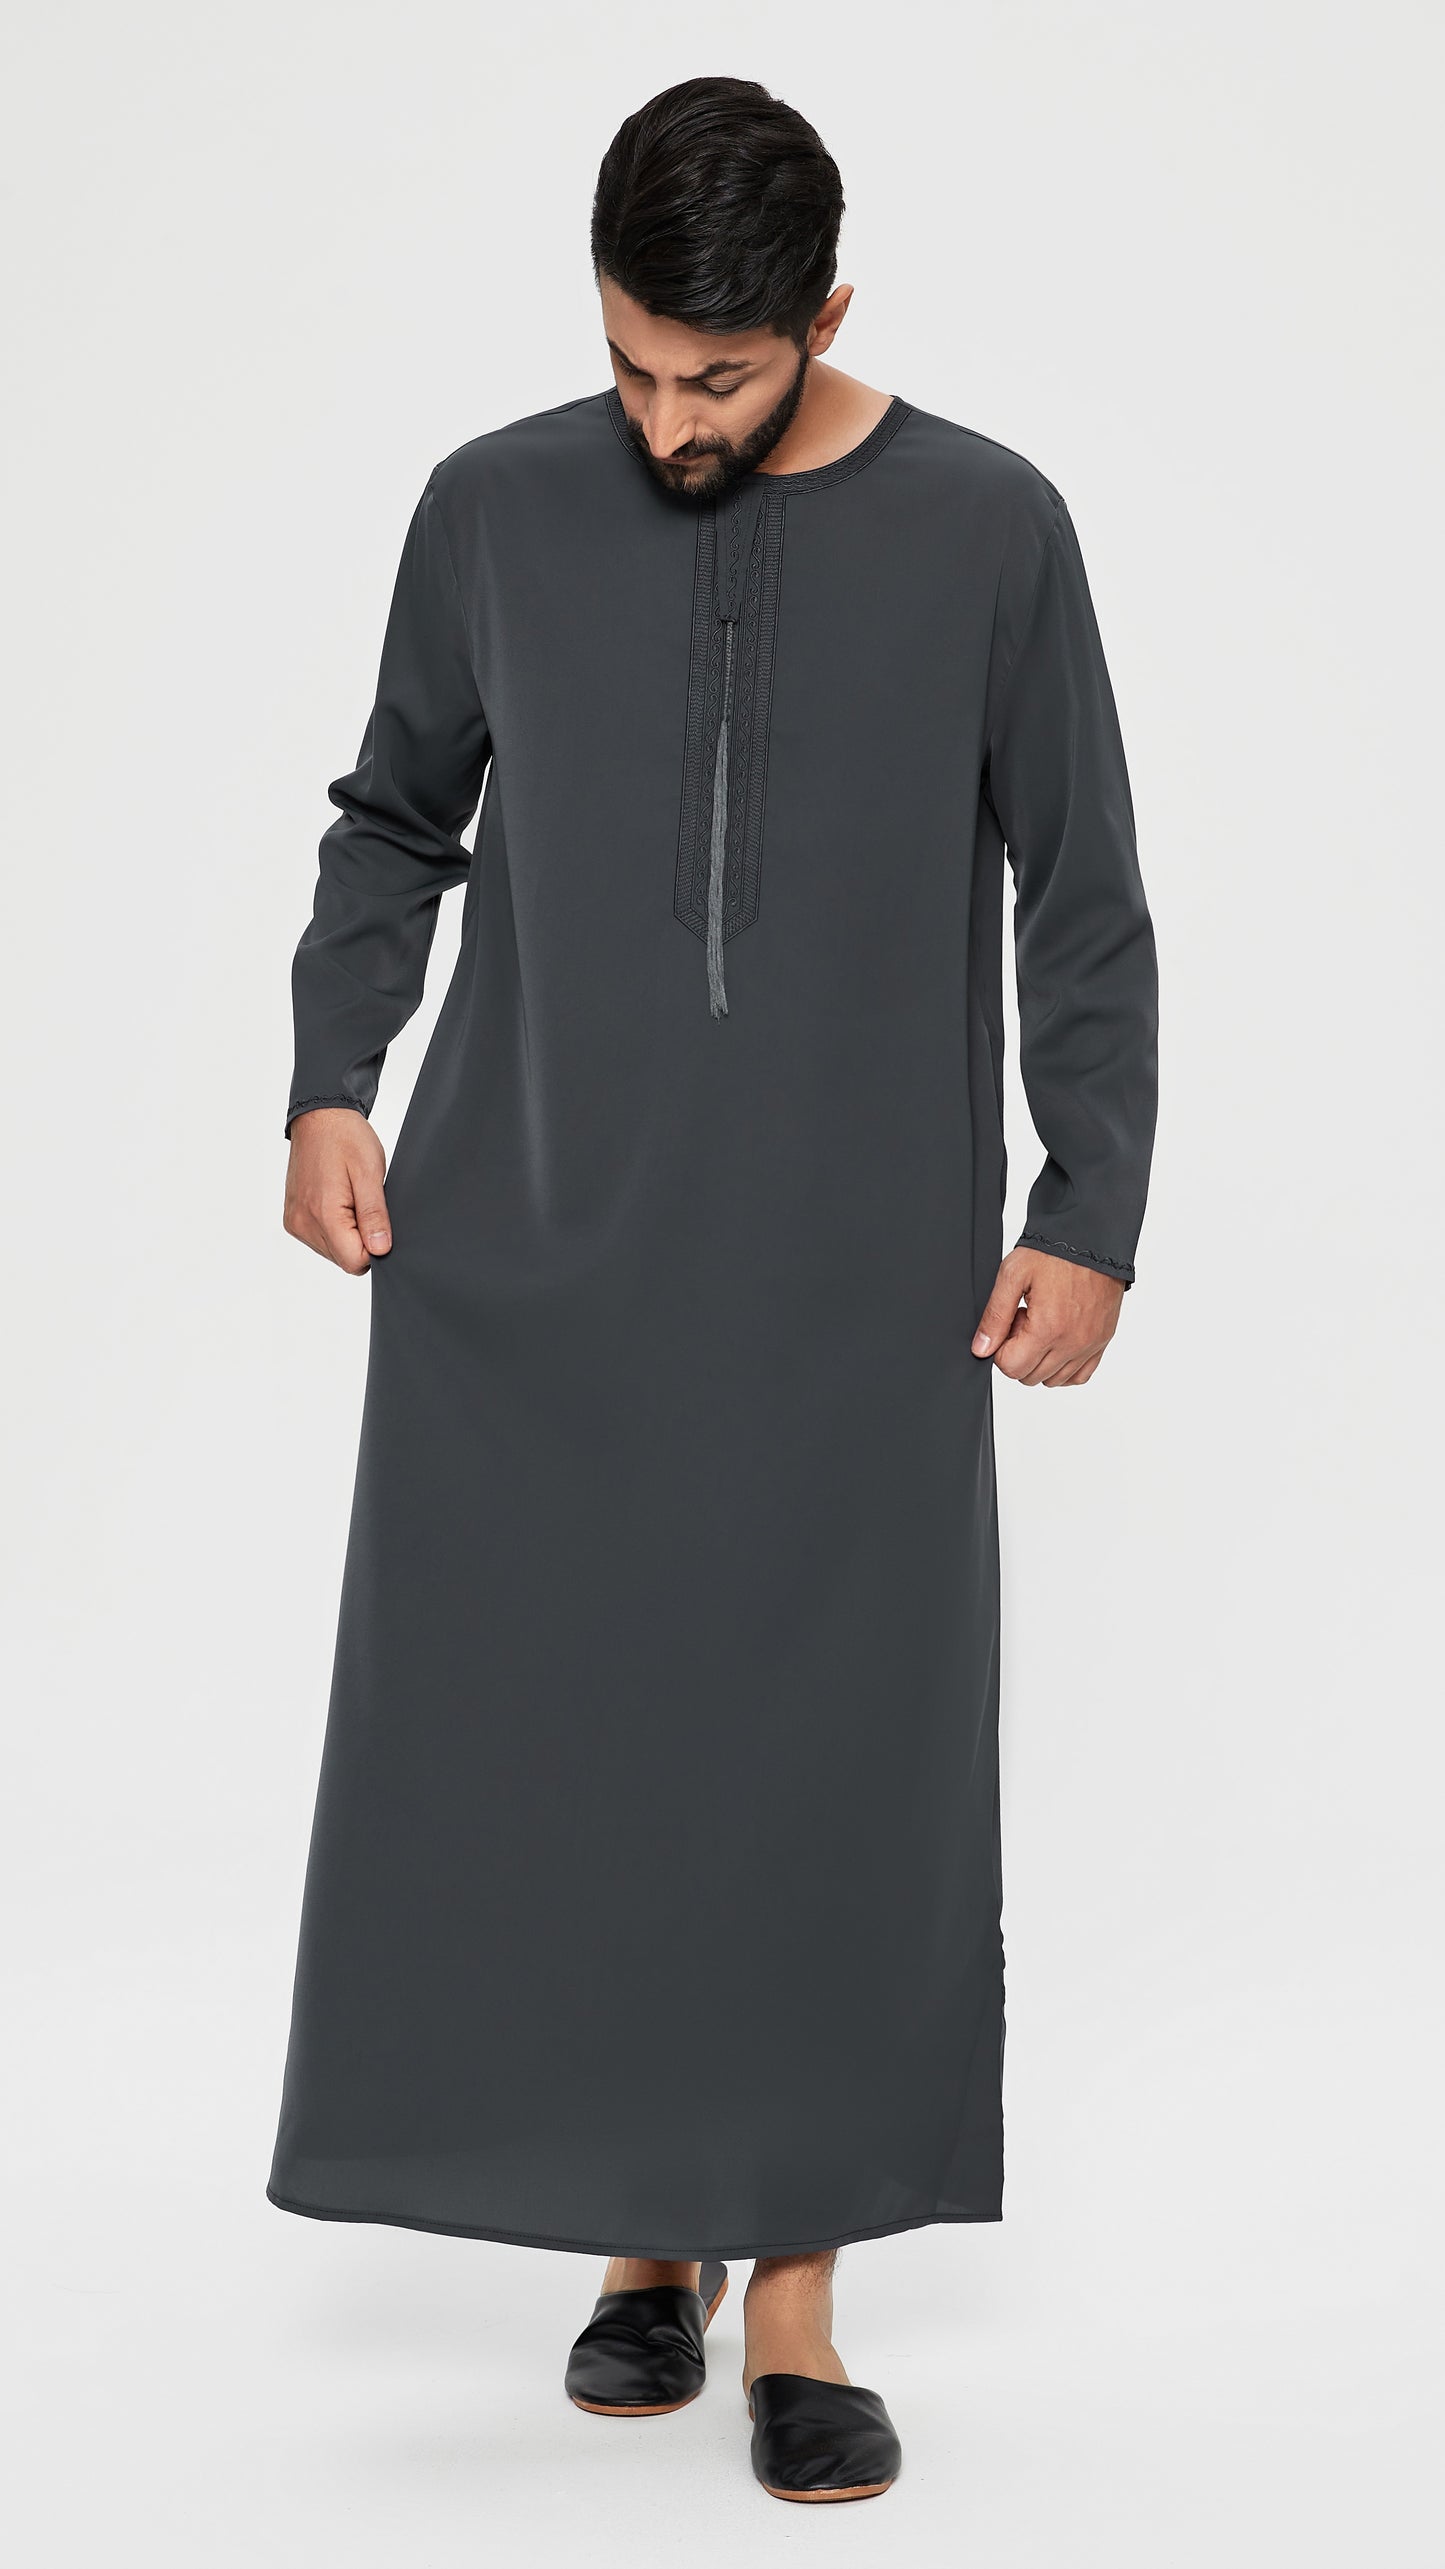 Qamis - Saudí Gris con bordado de corbata